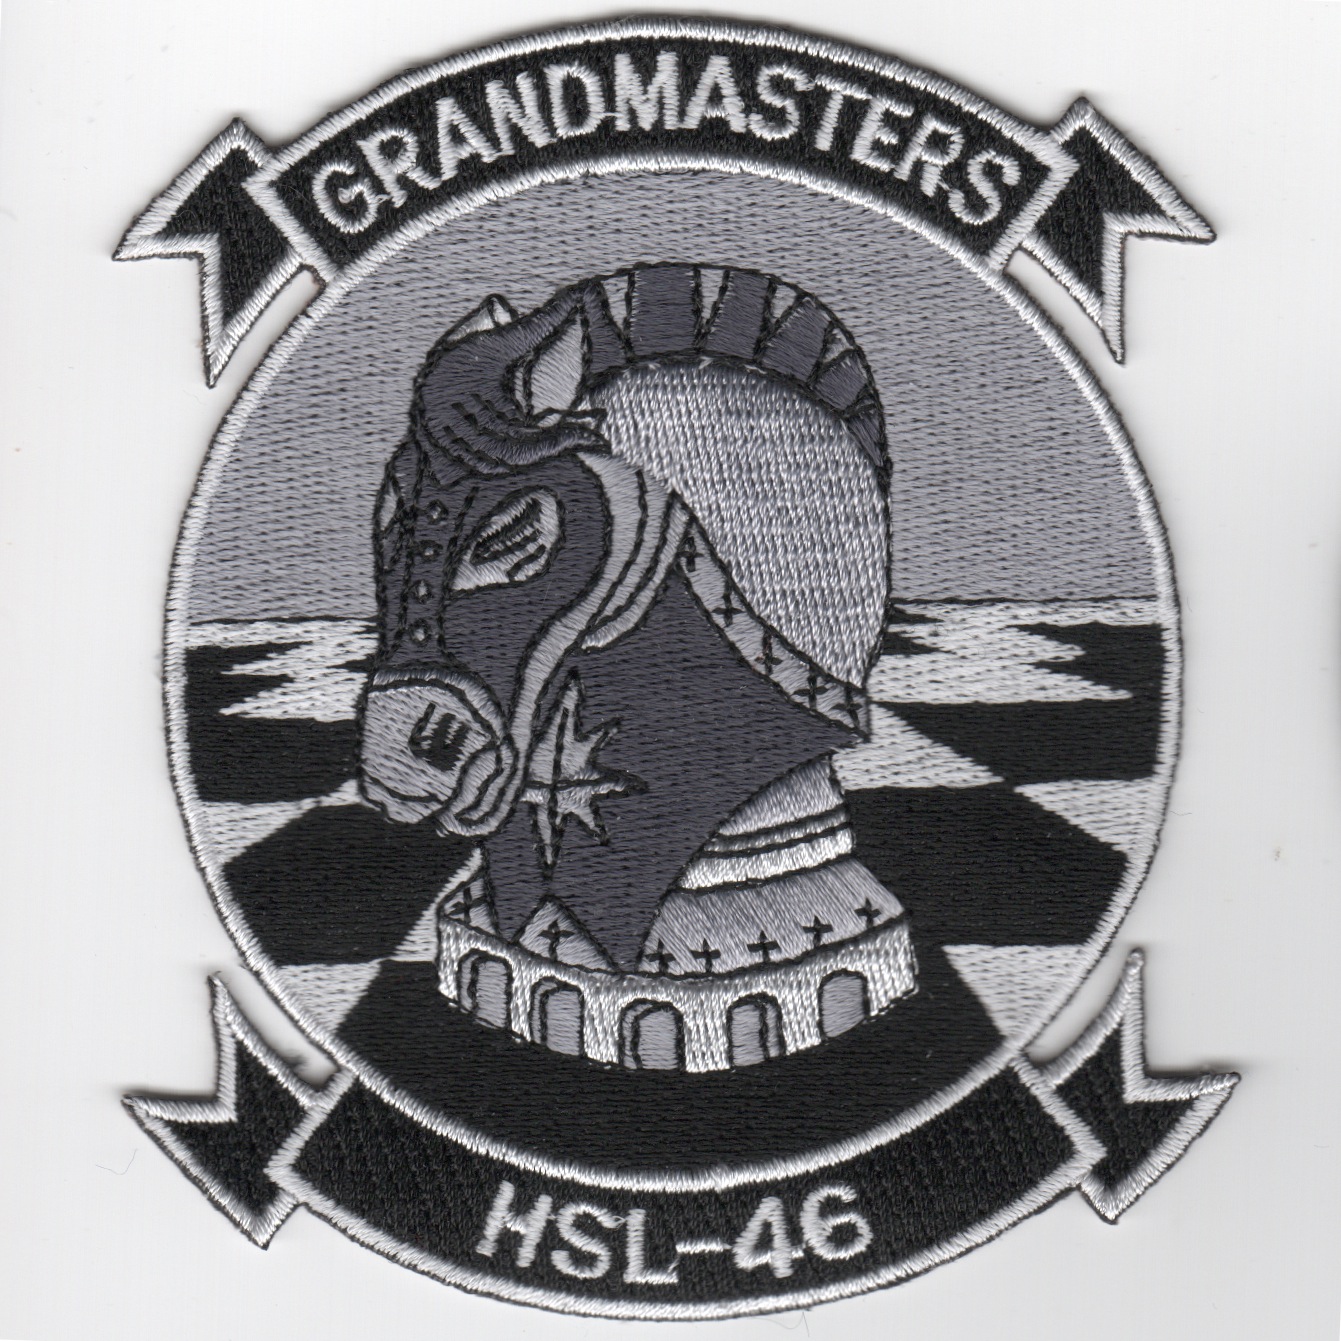 HSL-46 Squadron Patch (Black/Horse Looking Left)